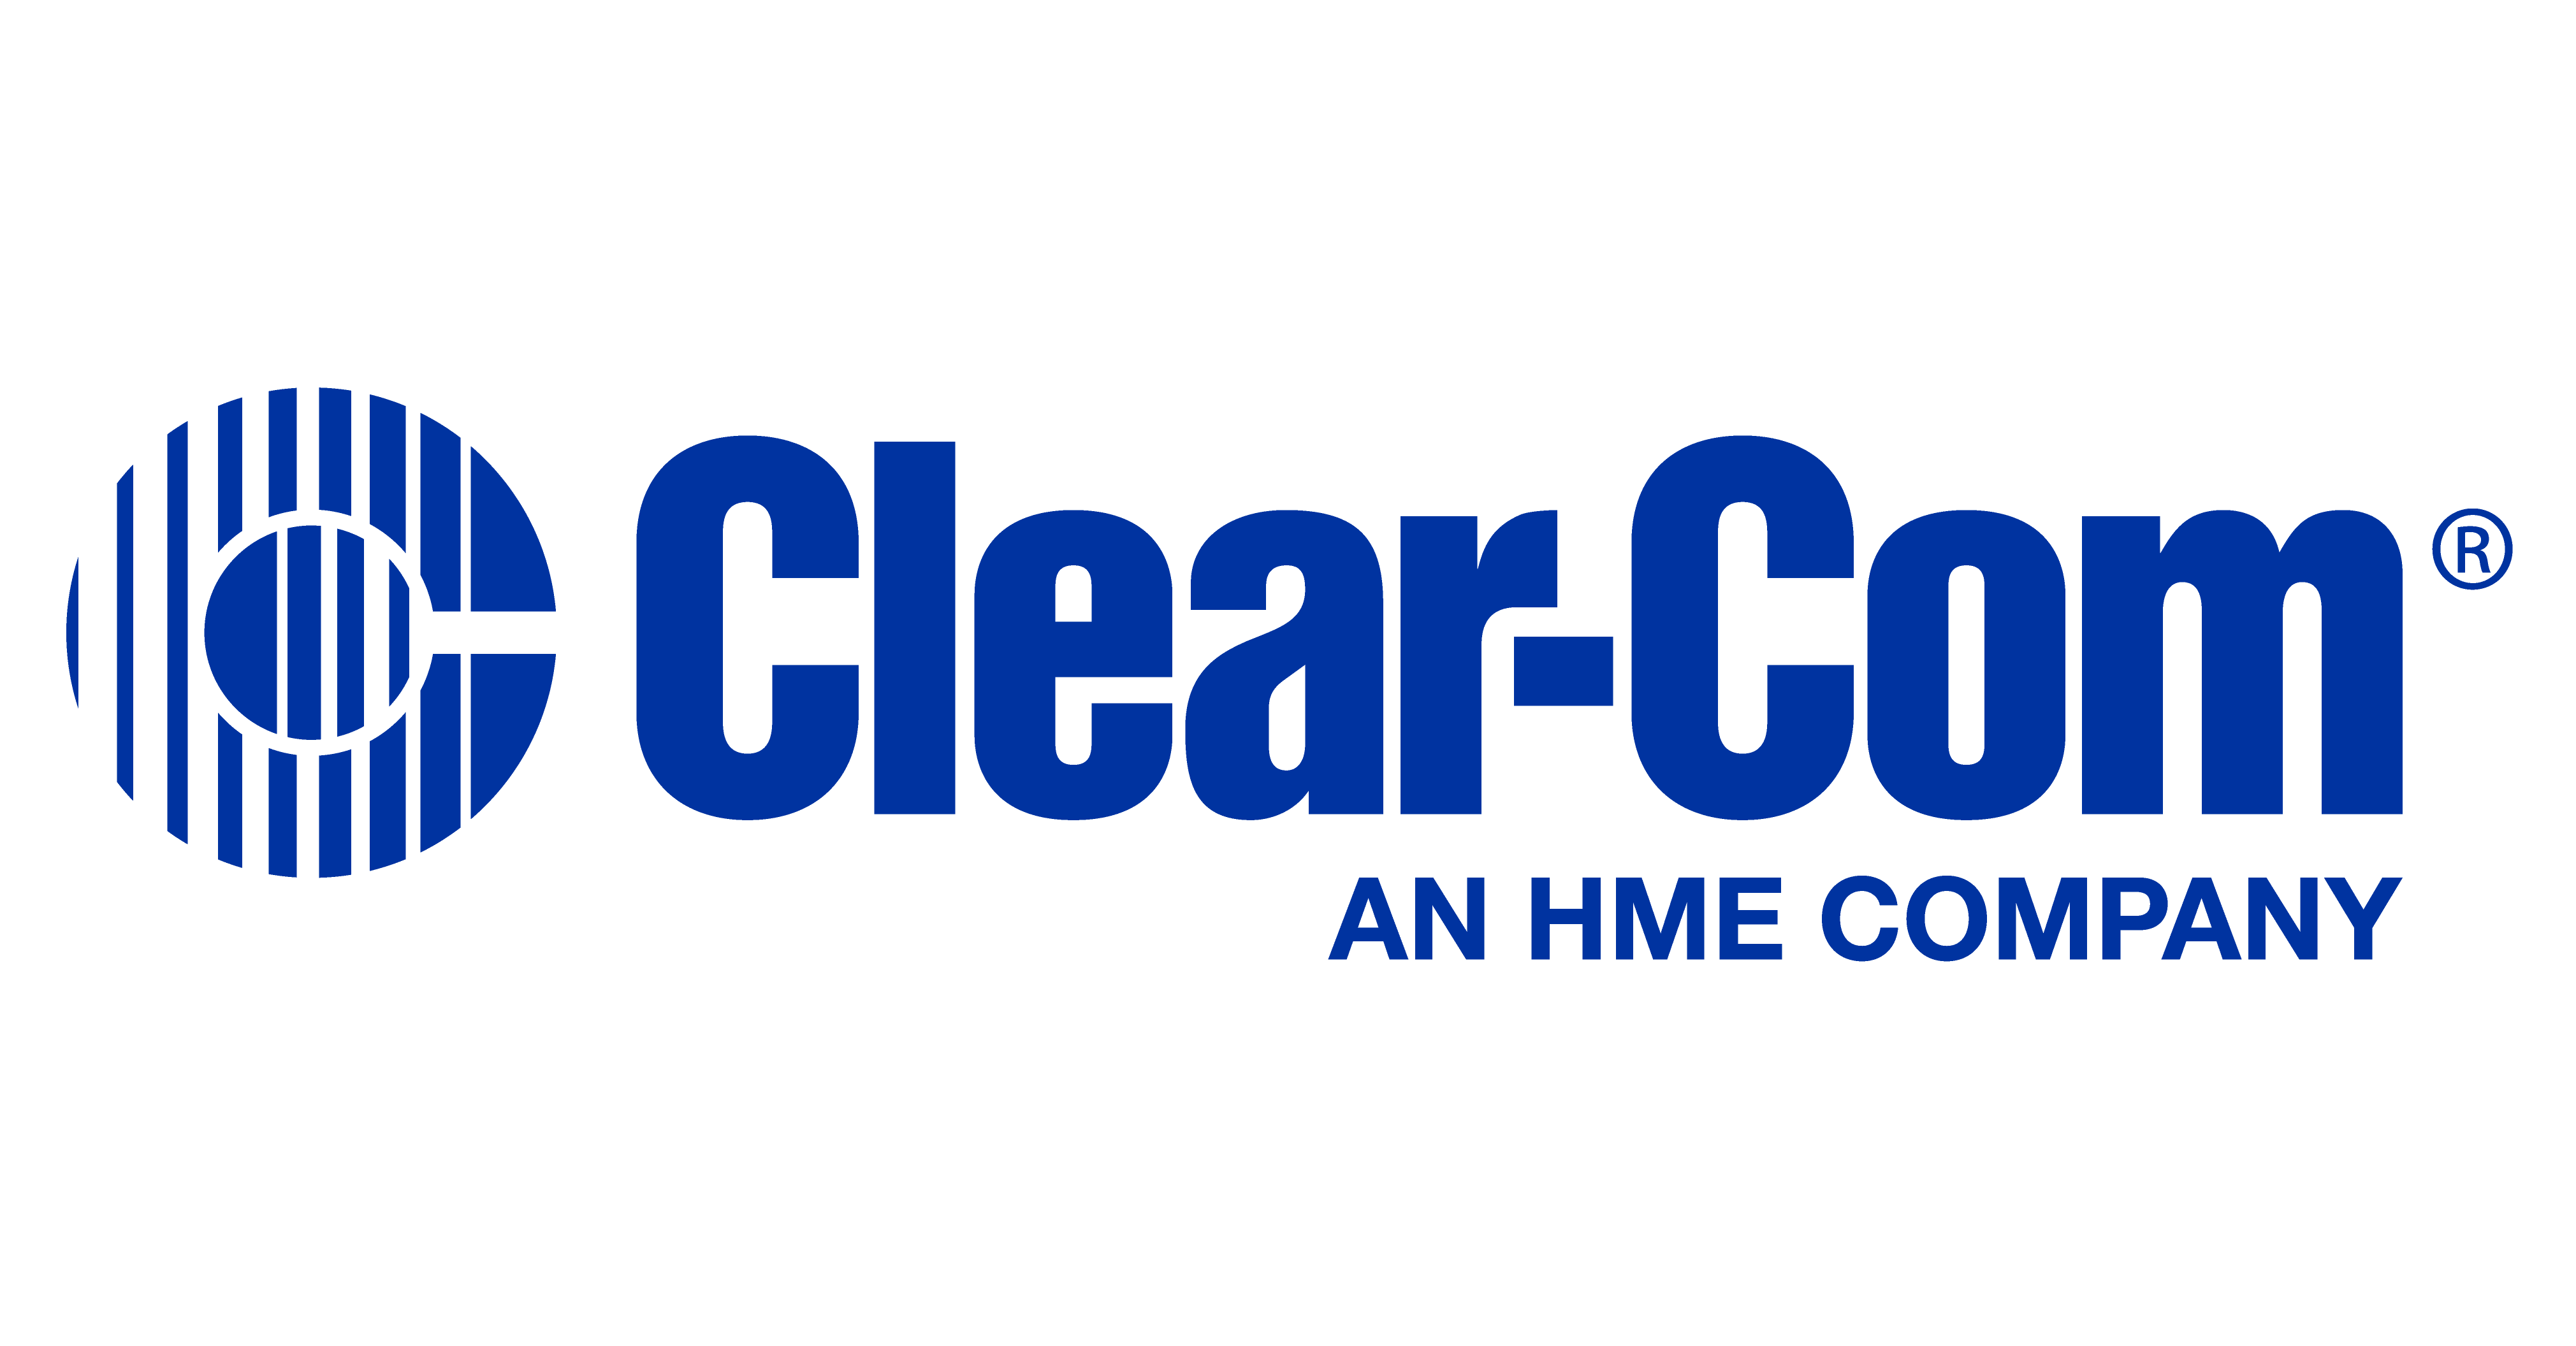 Clear connection. CLEARCOM. Clear логотип. Служебная связь CLEARCOM. Clear.com связь.